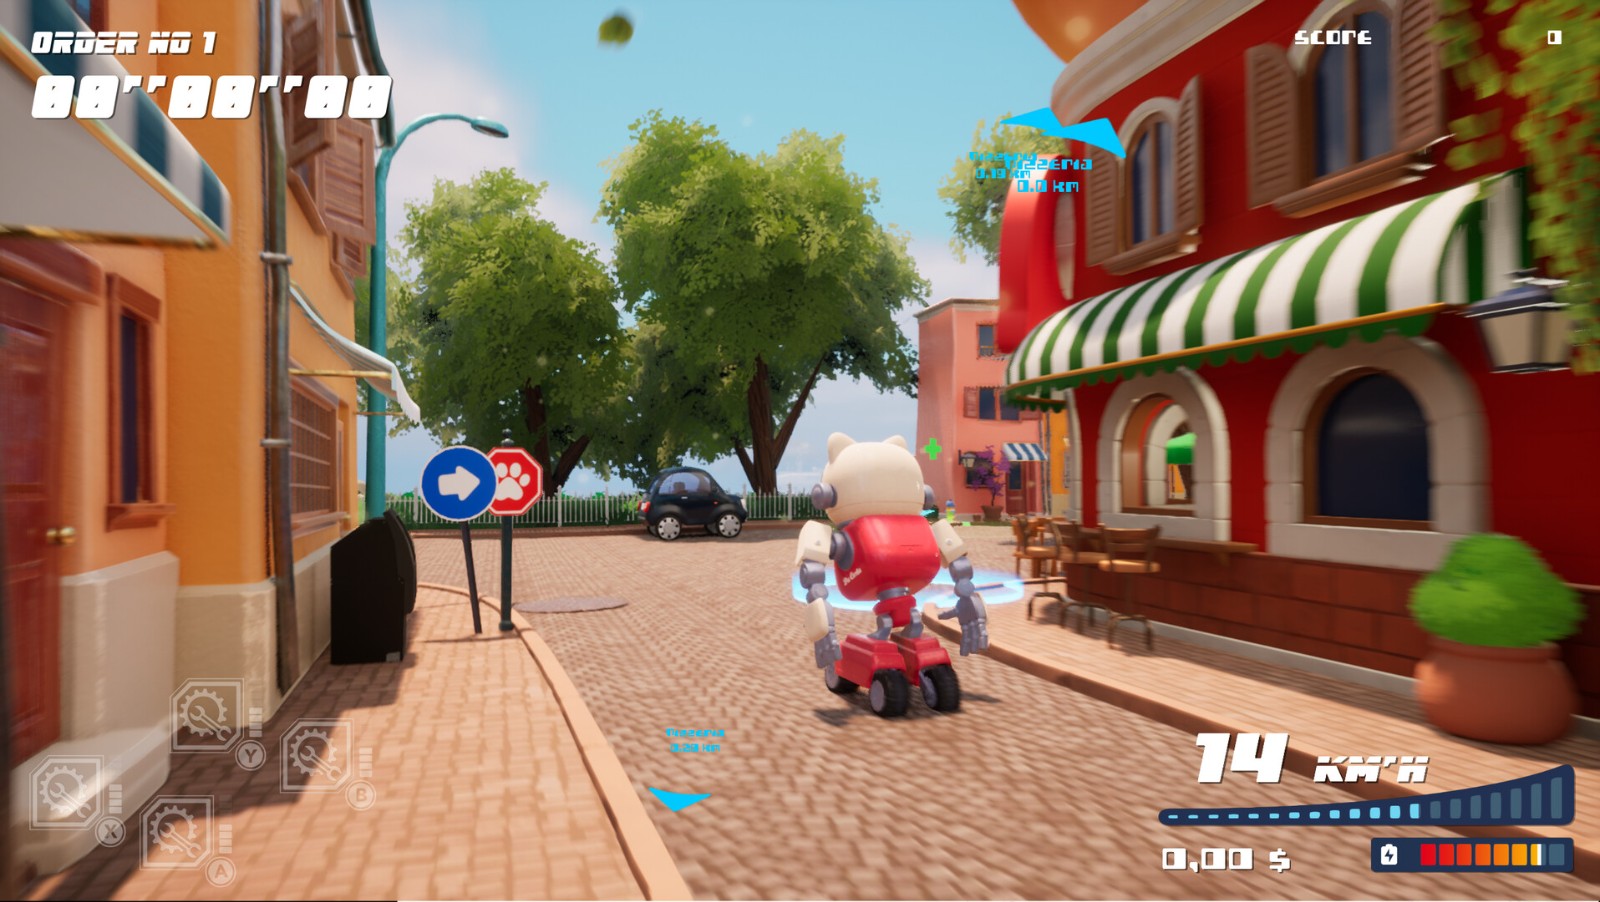 《PizzaPanic》Steam頁面上線 可愛貓咪機器人配送競速